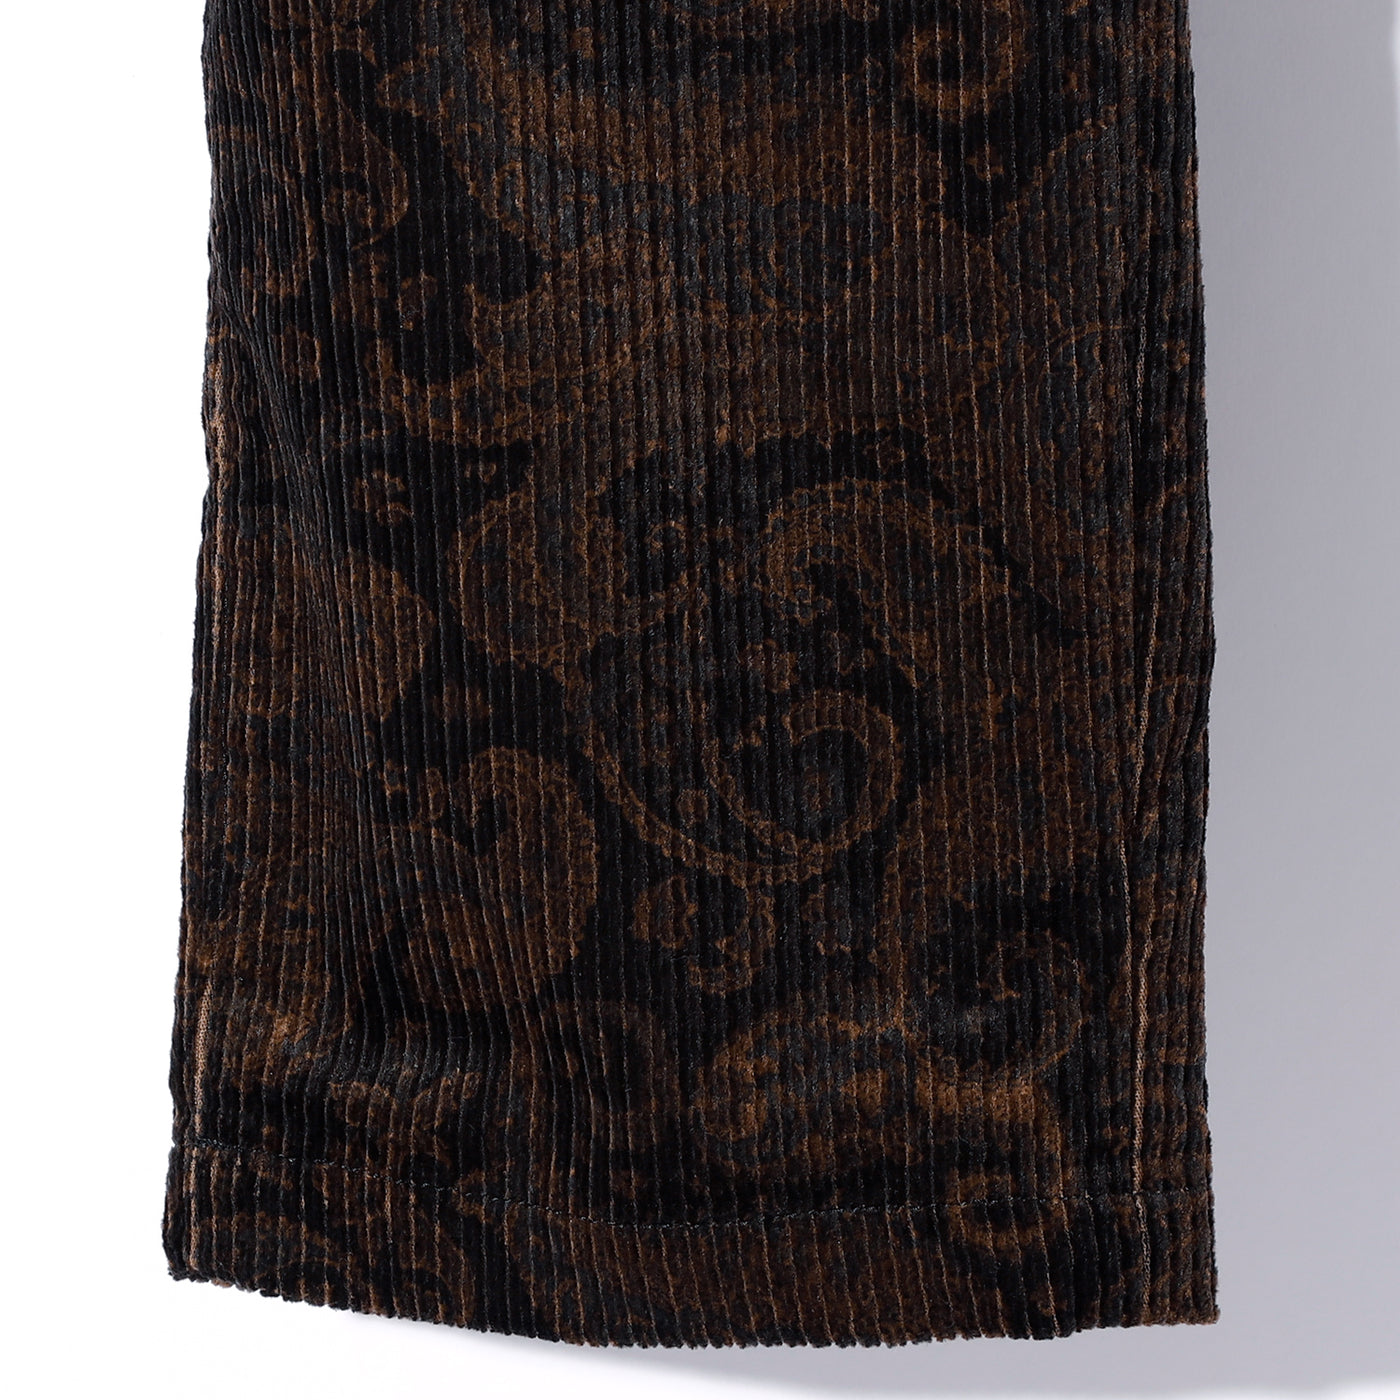 B.H.C.C Embroidery Paisley Pants / BLACK